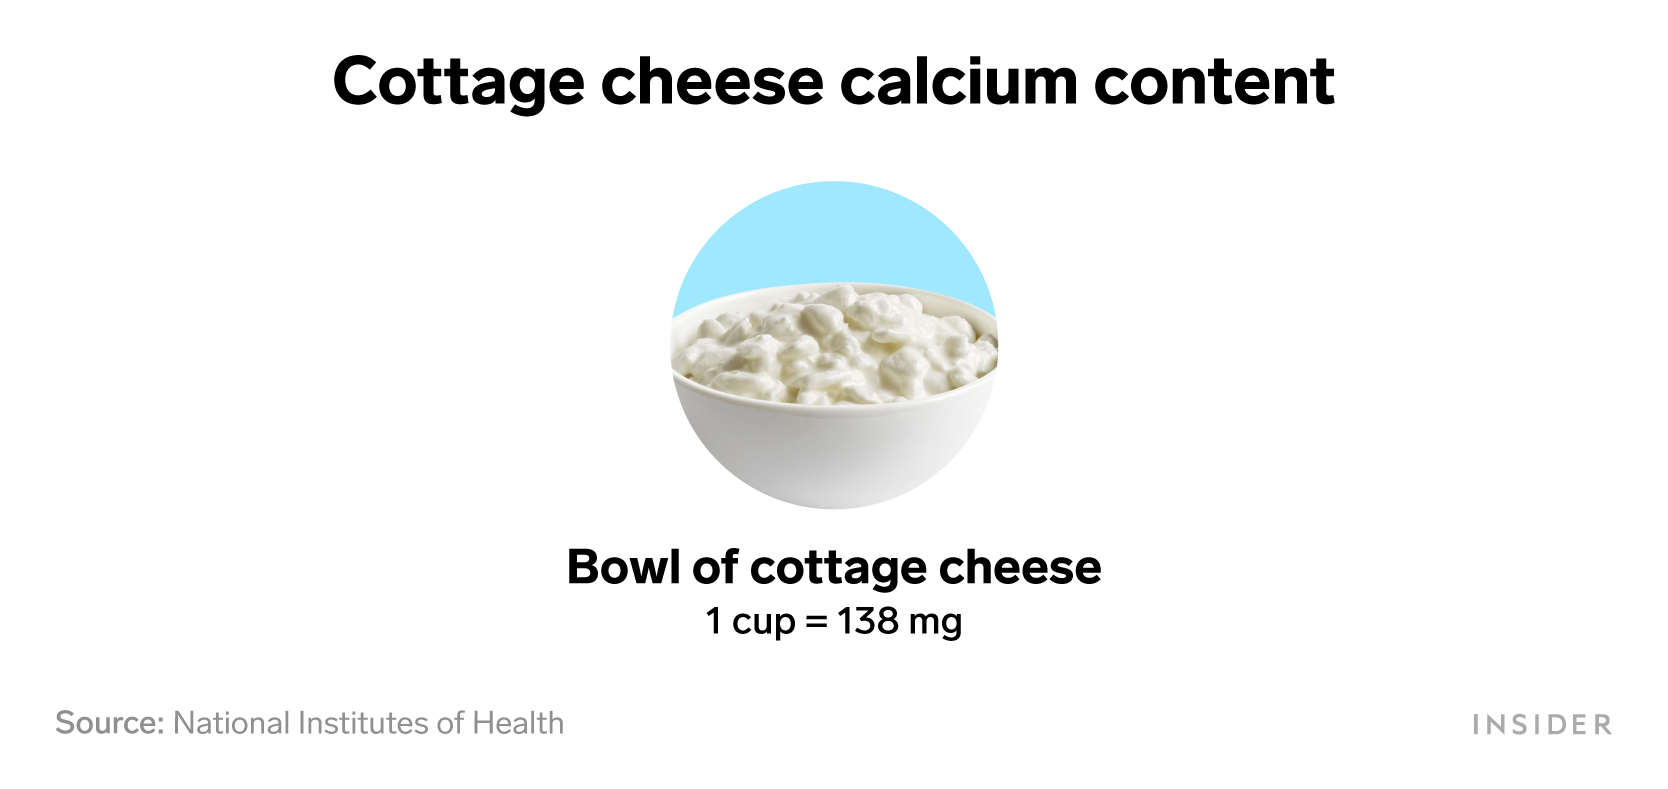 Foods that are rich in calcium: Cottage cheese calcium content